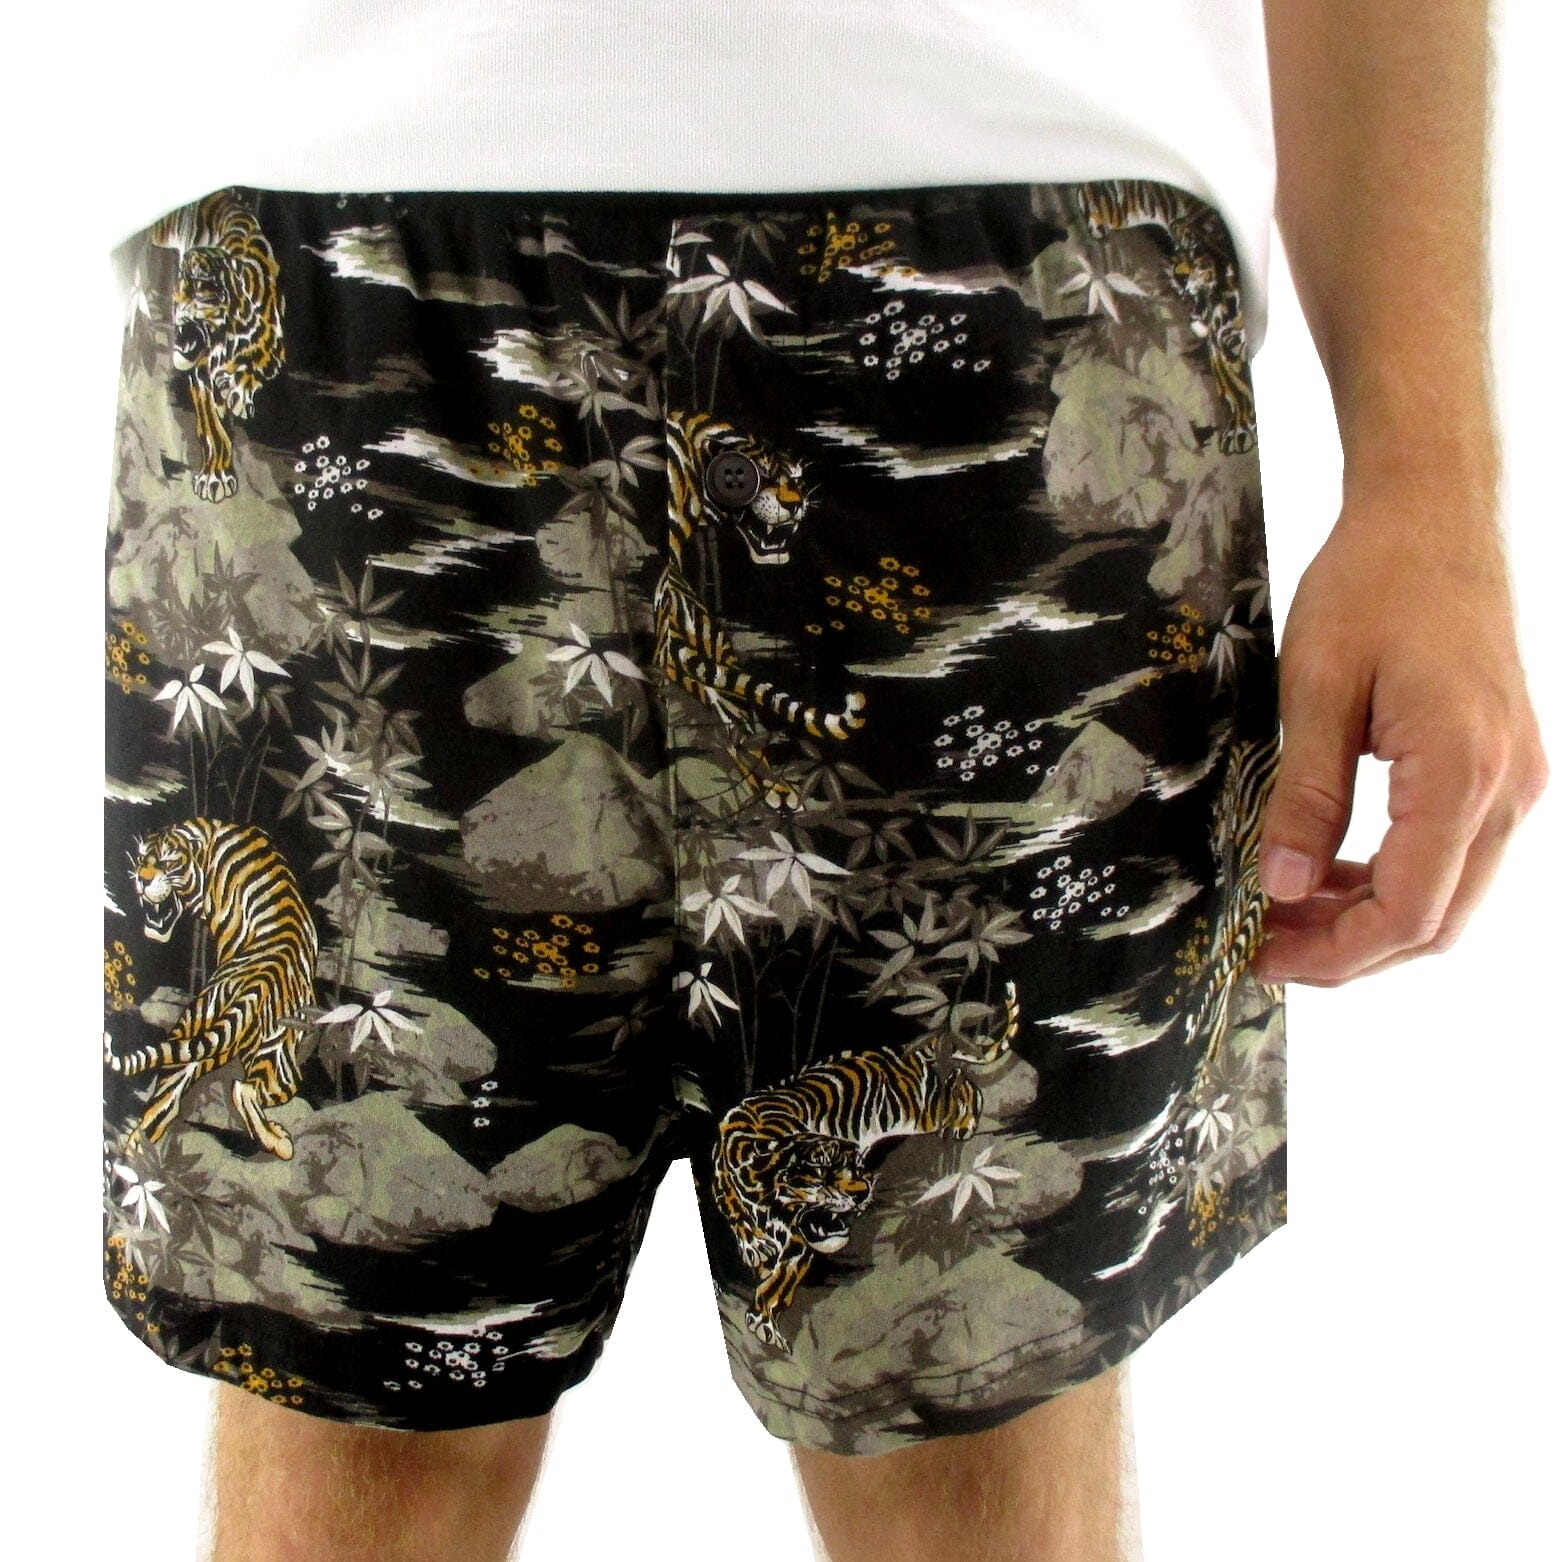 Men's Sleepwear. Soft Comfy Tiger All Over Print Cotton Pyjama Shorts